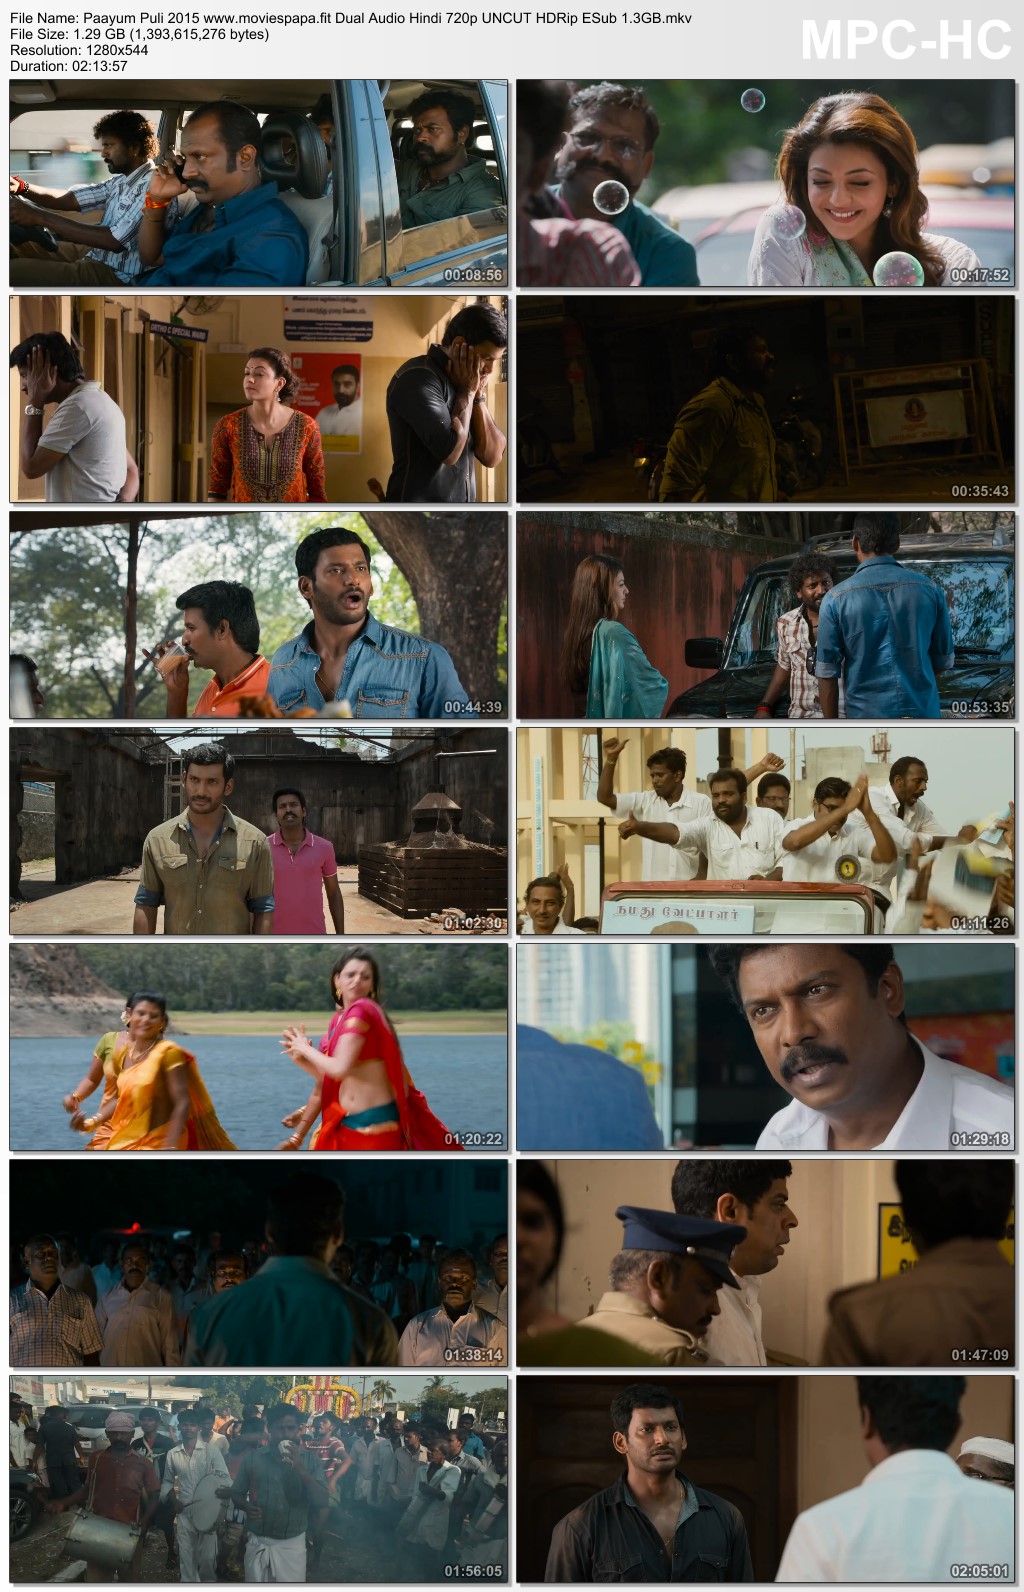 watch paayum puli tamil movie online free